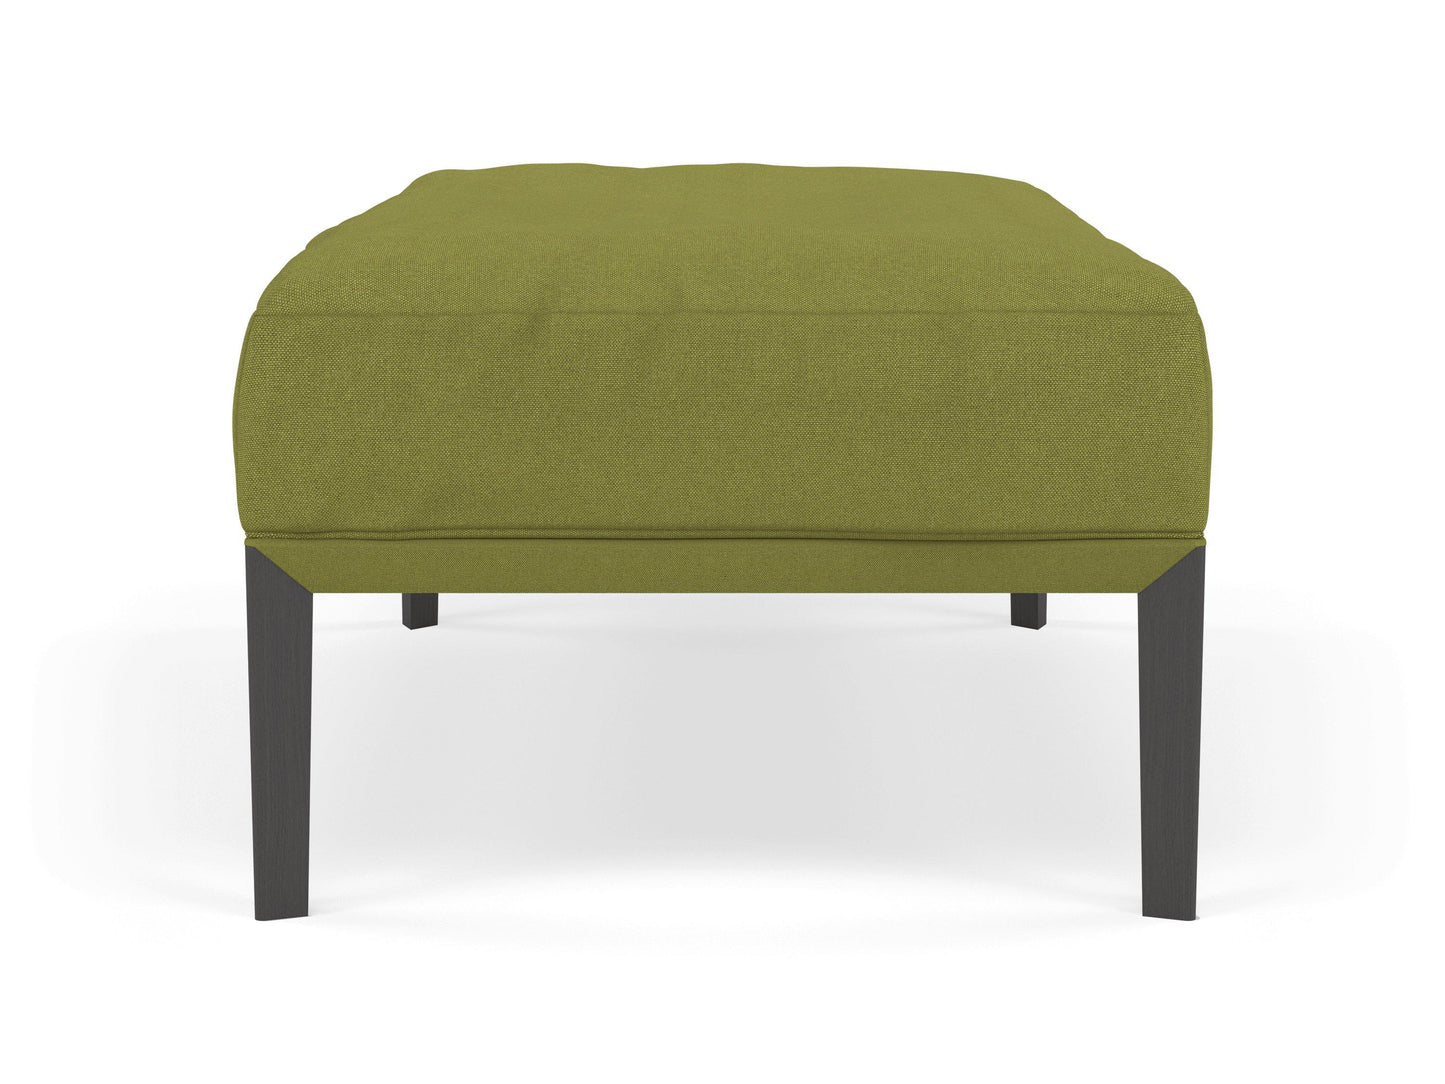 Modern Pouffe Footstool Ottoman Rectangular Seat 103x65cm in Lime Green Fabric-Distinct Designs (London) Ltd